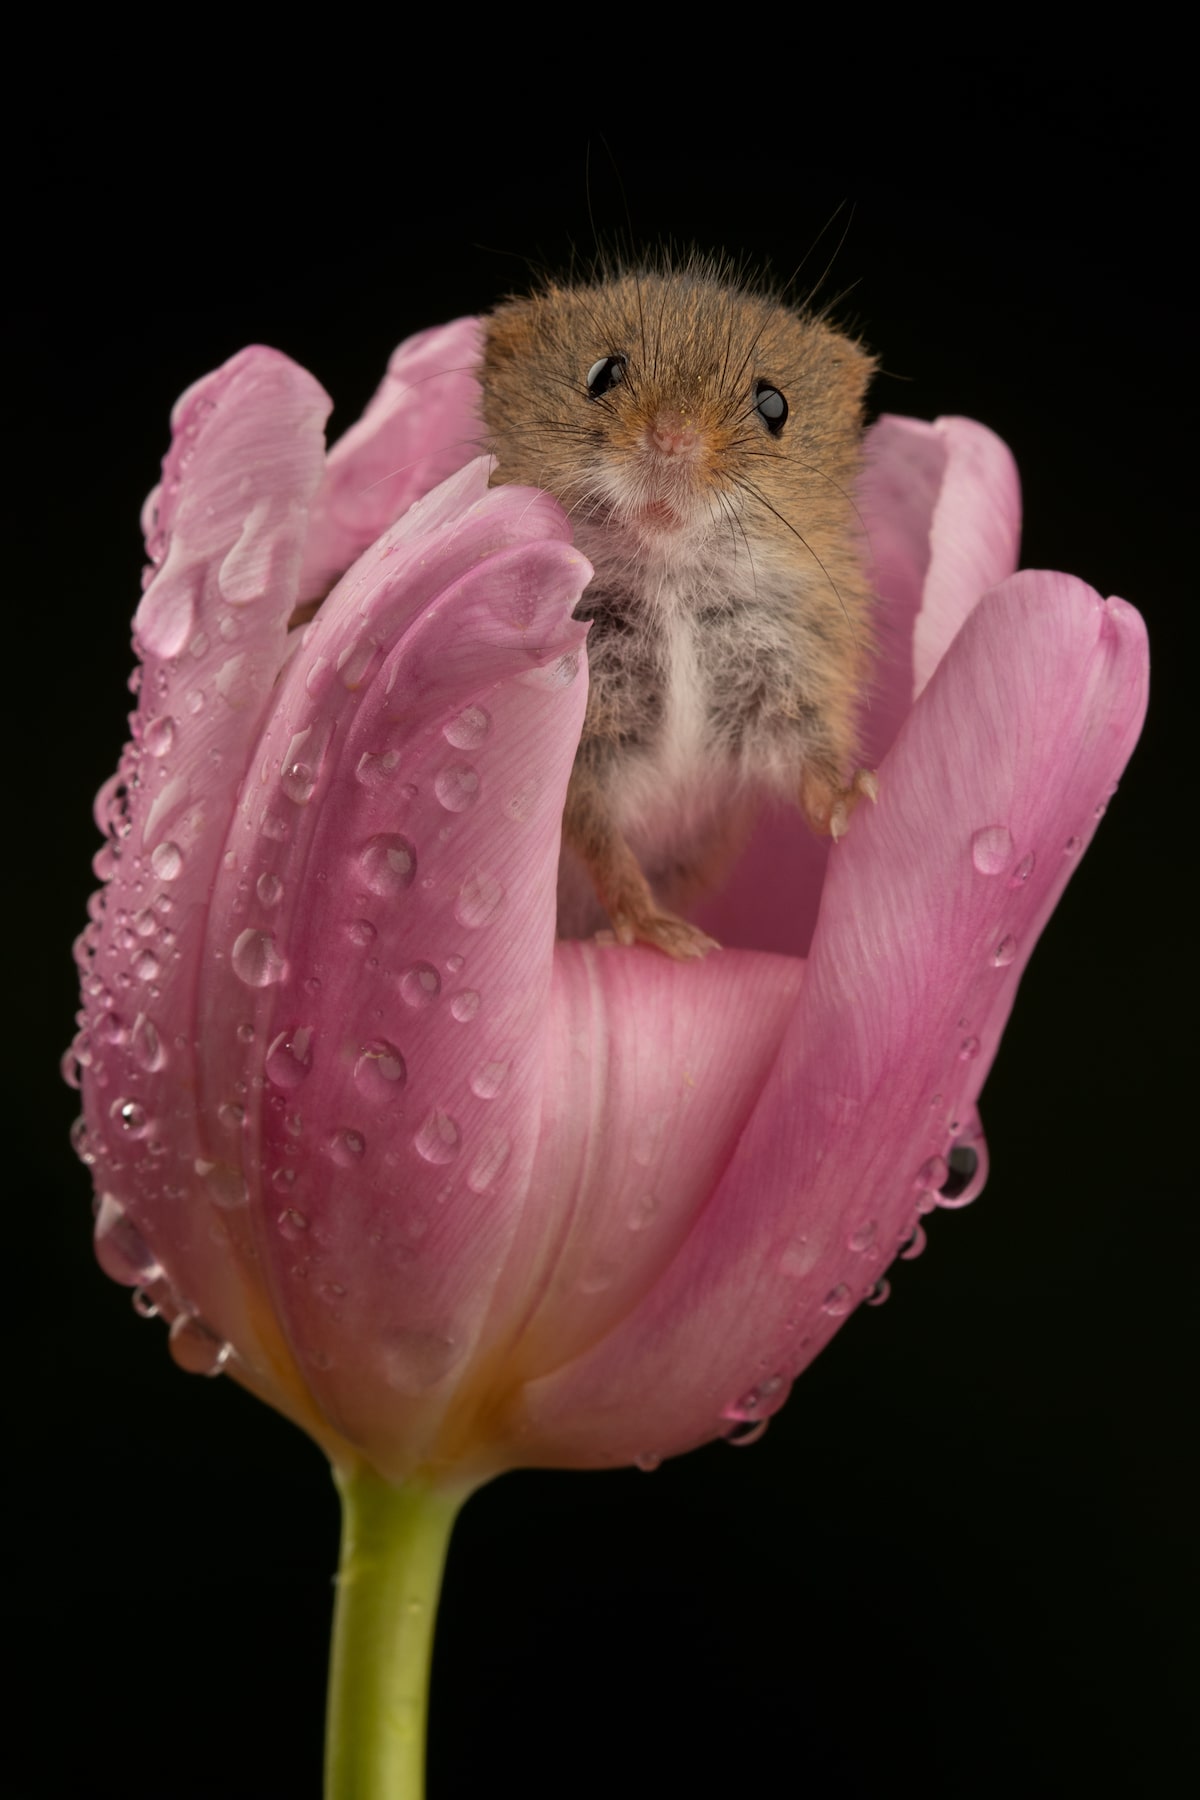 Cute Mouse in a Tulip